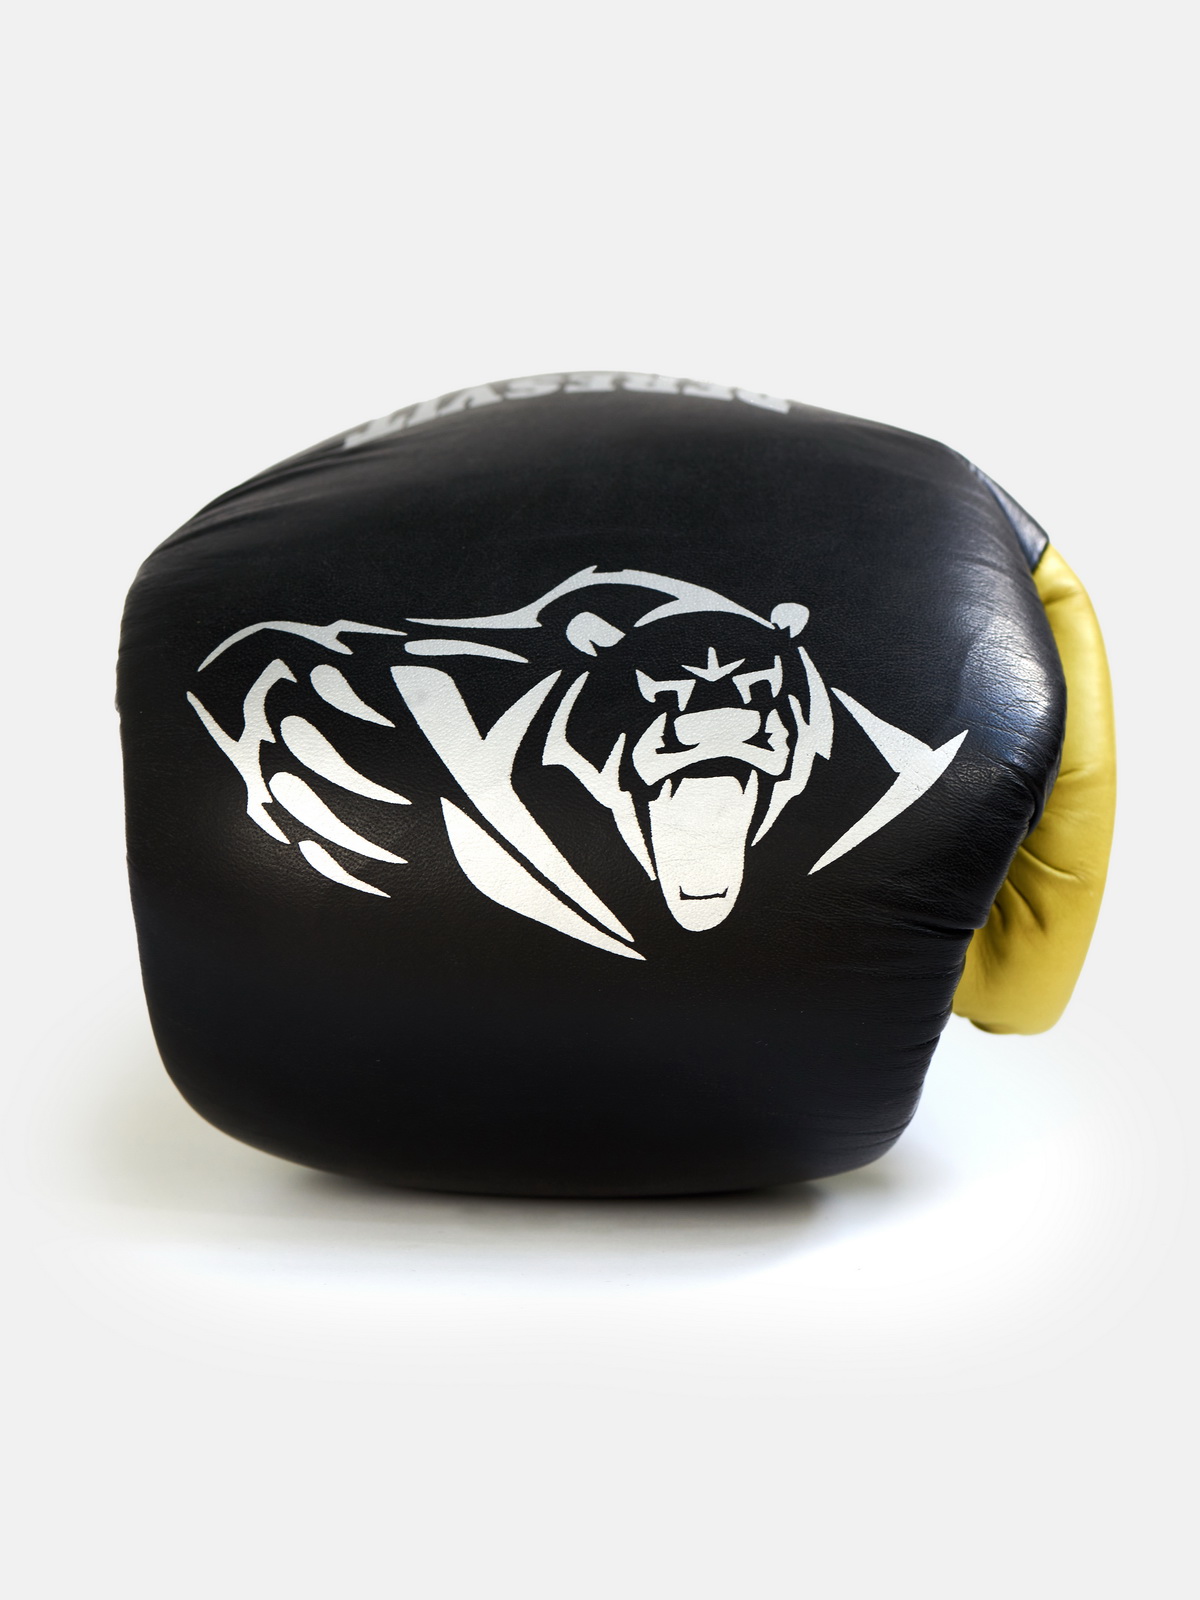 Peresvit Fusion Boxing Gloves, Photo No. 5